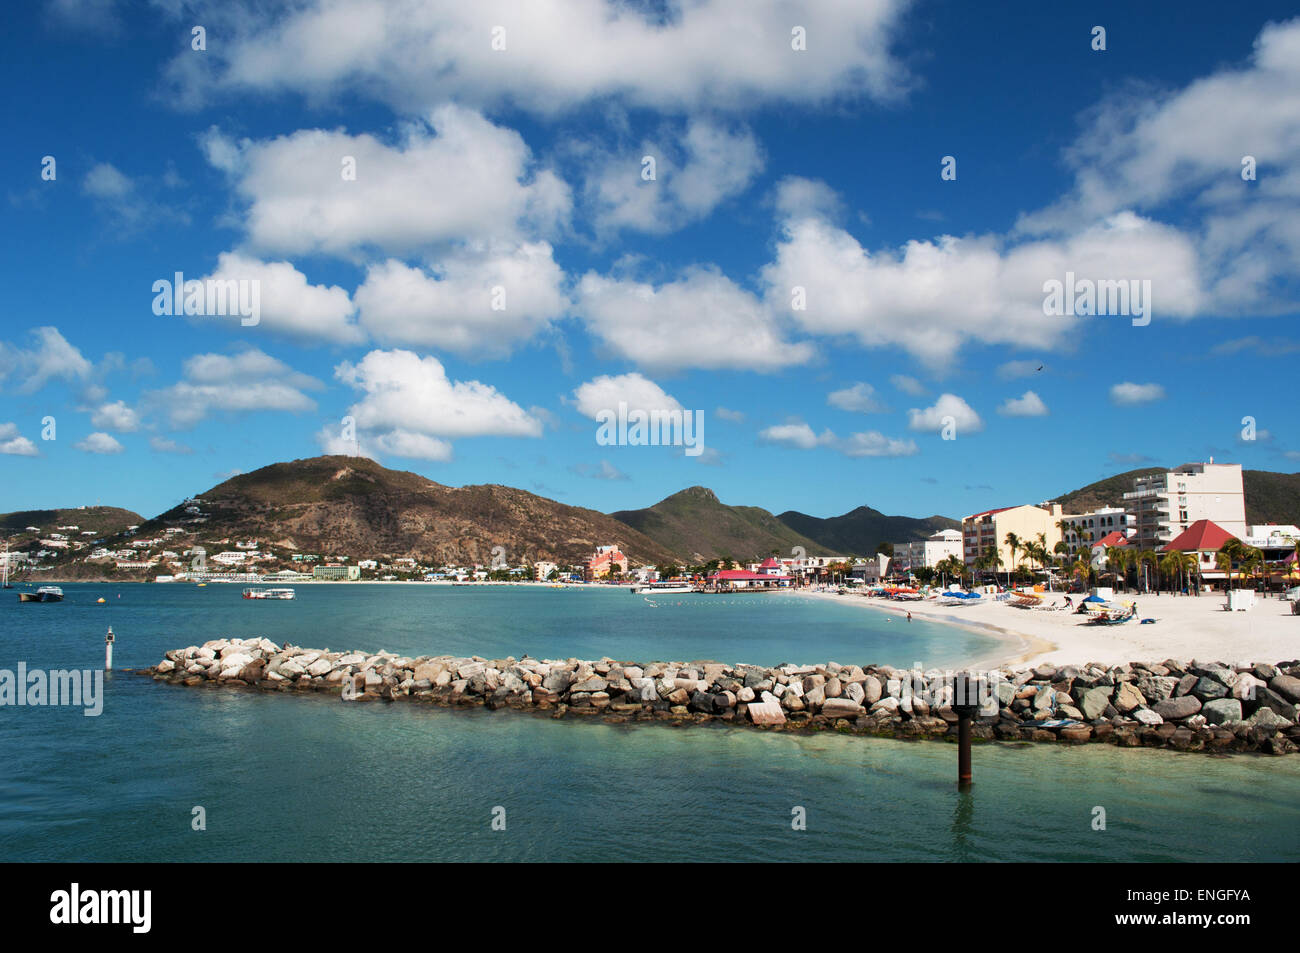 Netherlands Antilles, Caribbean: the dock in the port of Philipsburg, the capital of the island of St Martin, Saint Martin, Sint Maarten Stock Photo